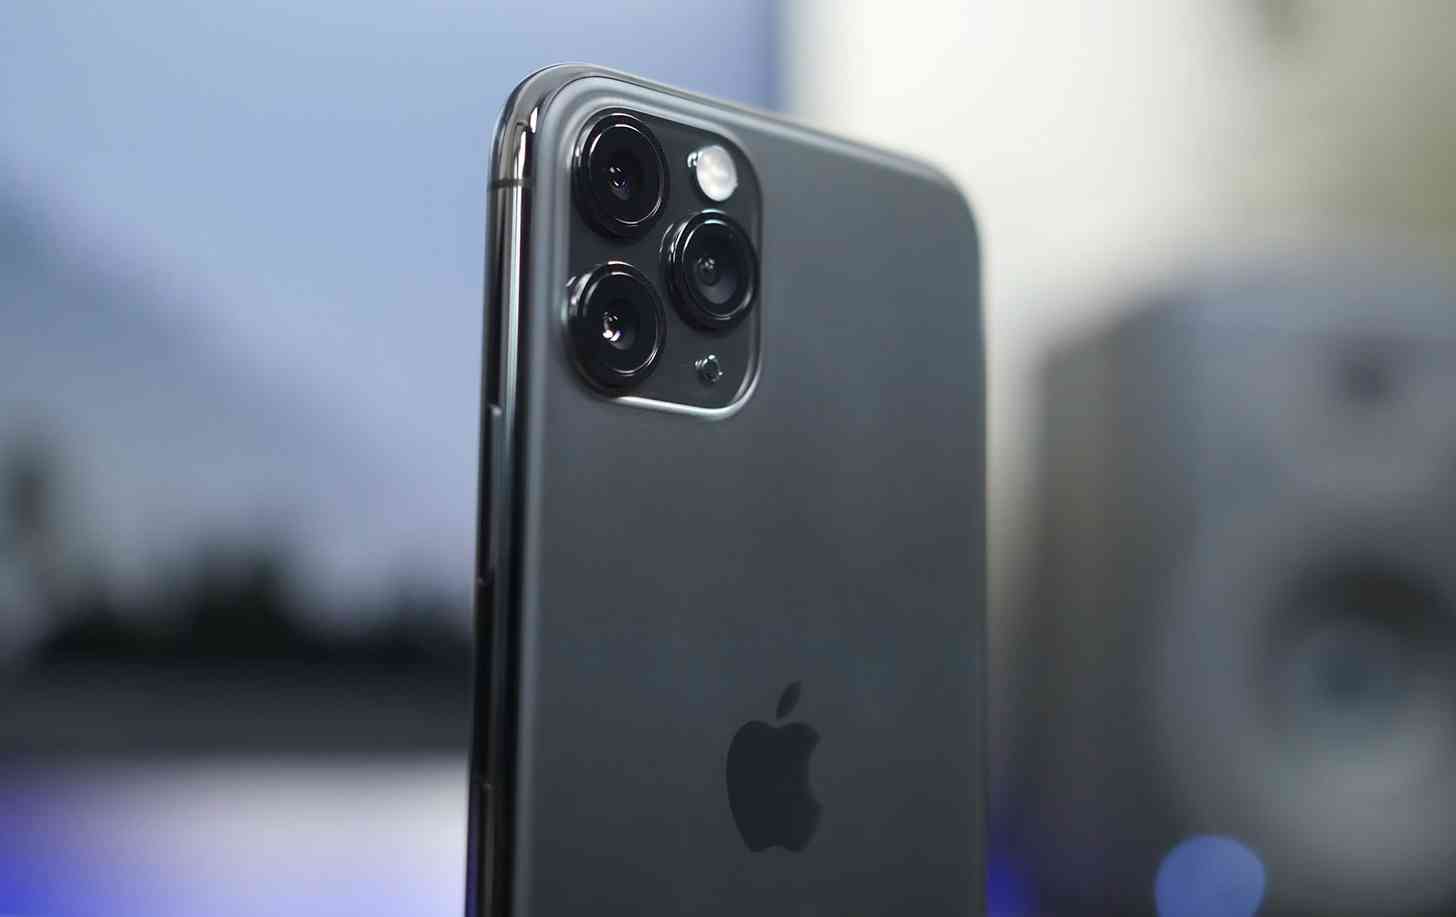 iPhone 11 Pro cameras